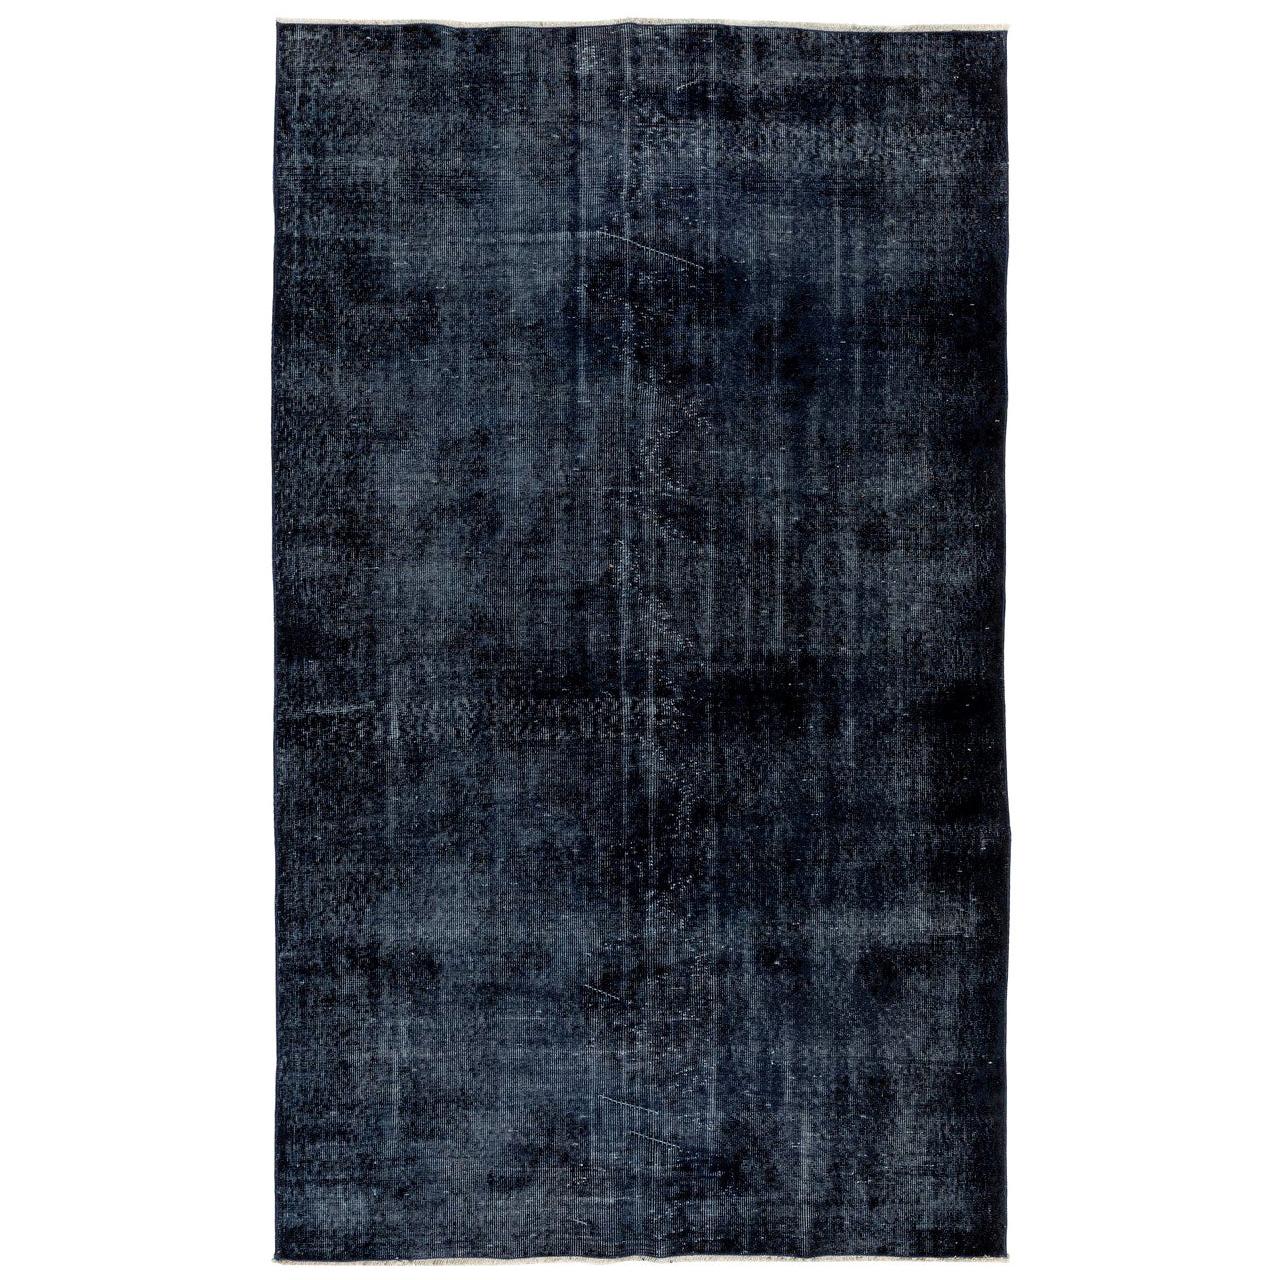 5.6x9.6 ft Vintage Handmade Wool Rug in Plain Navy Blue for Modern Interiors